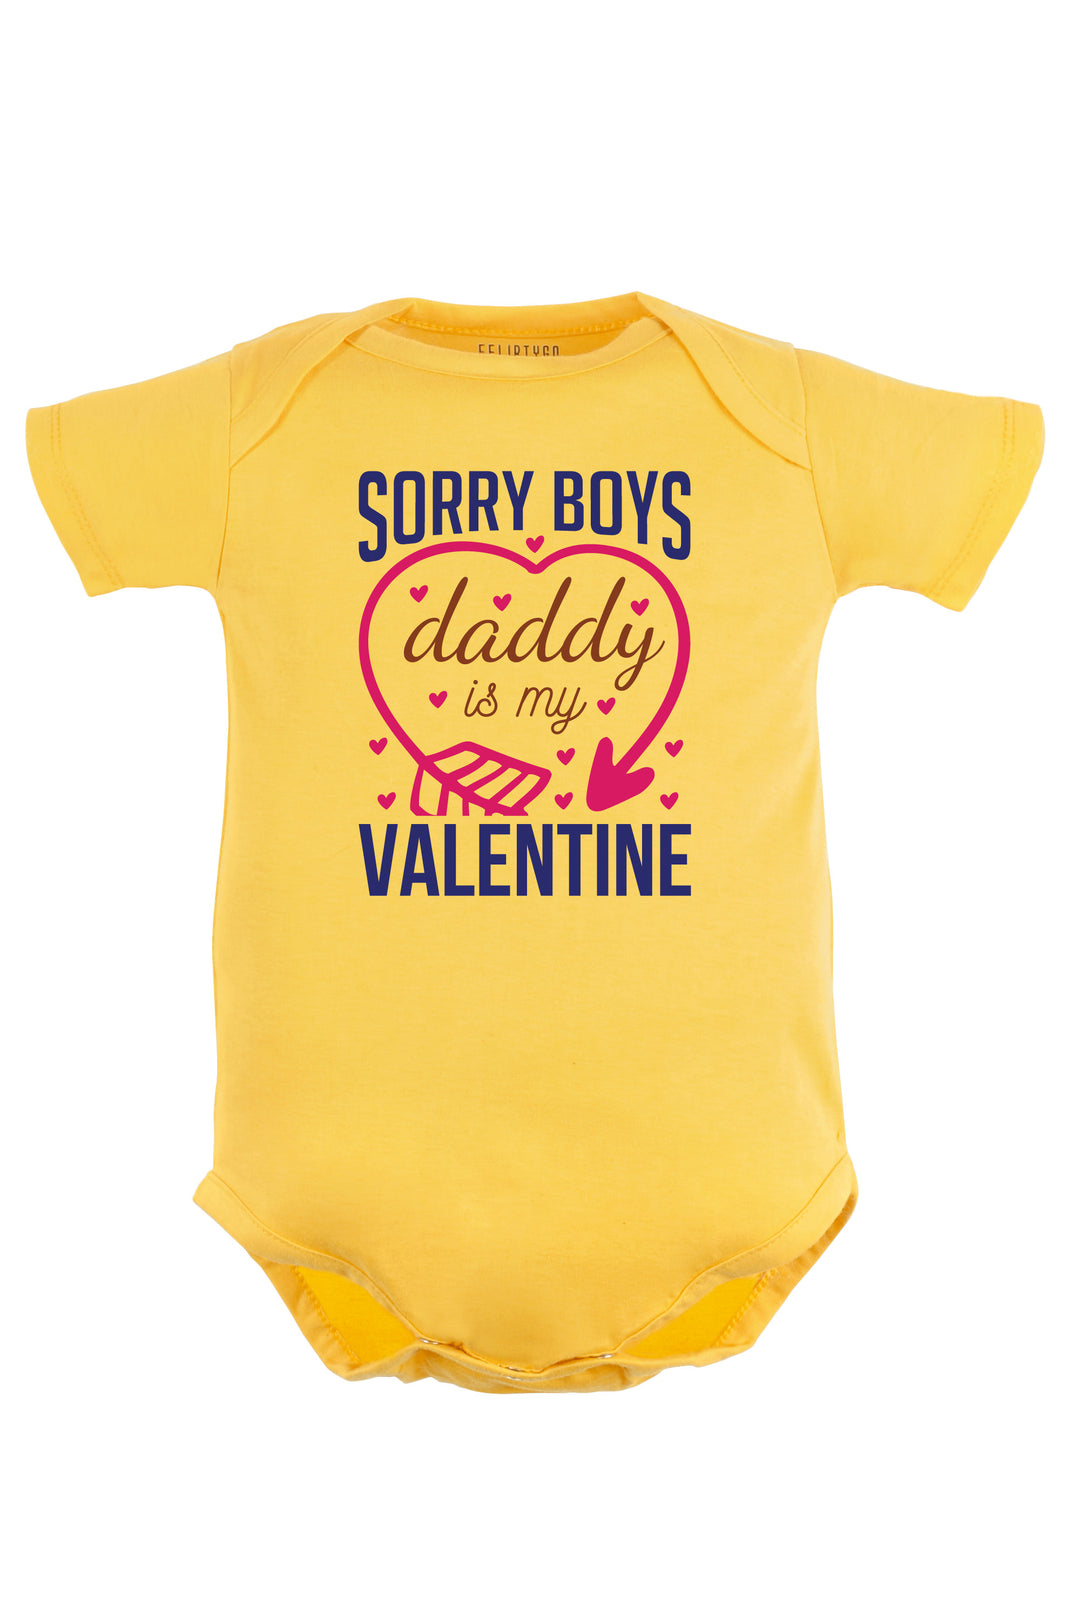 Sorry Boys Daddy Is My Valentine Baby Romper | Onesies